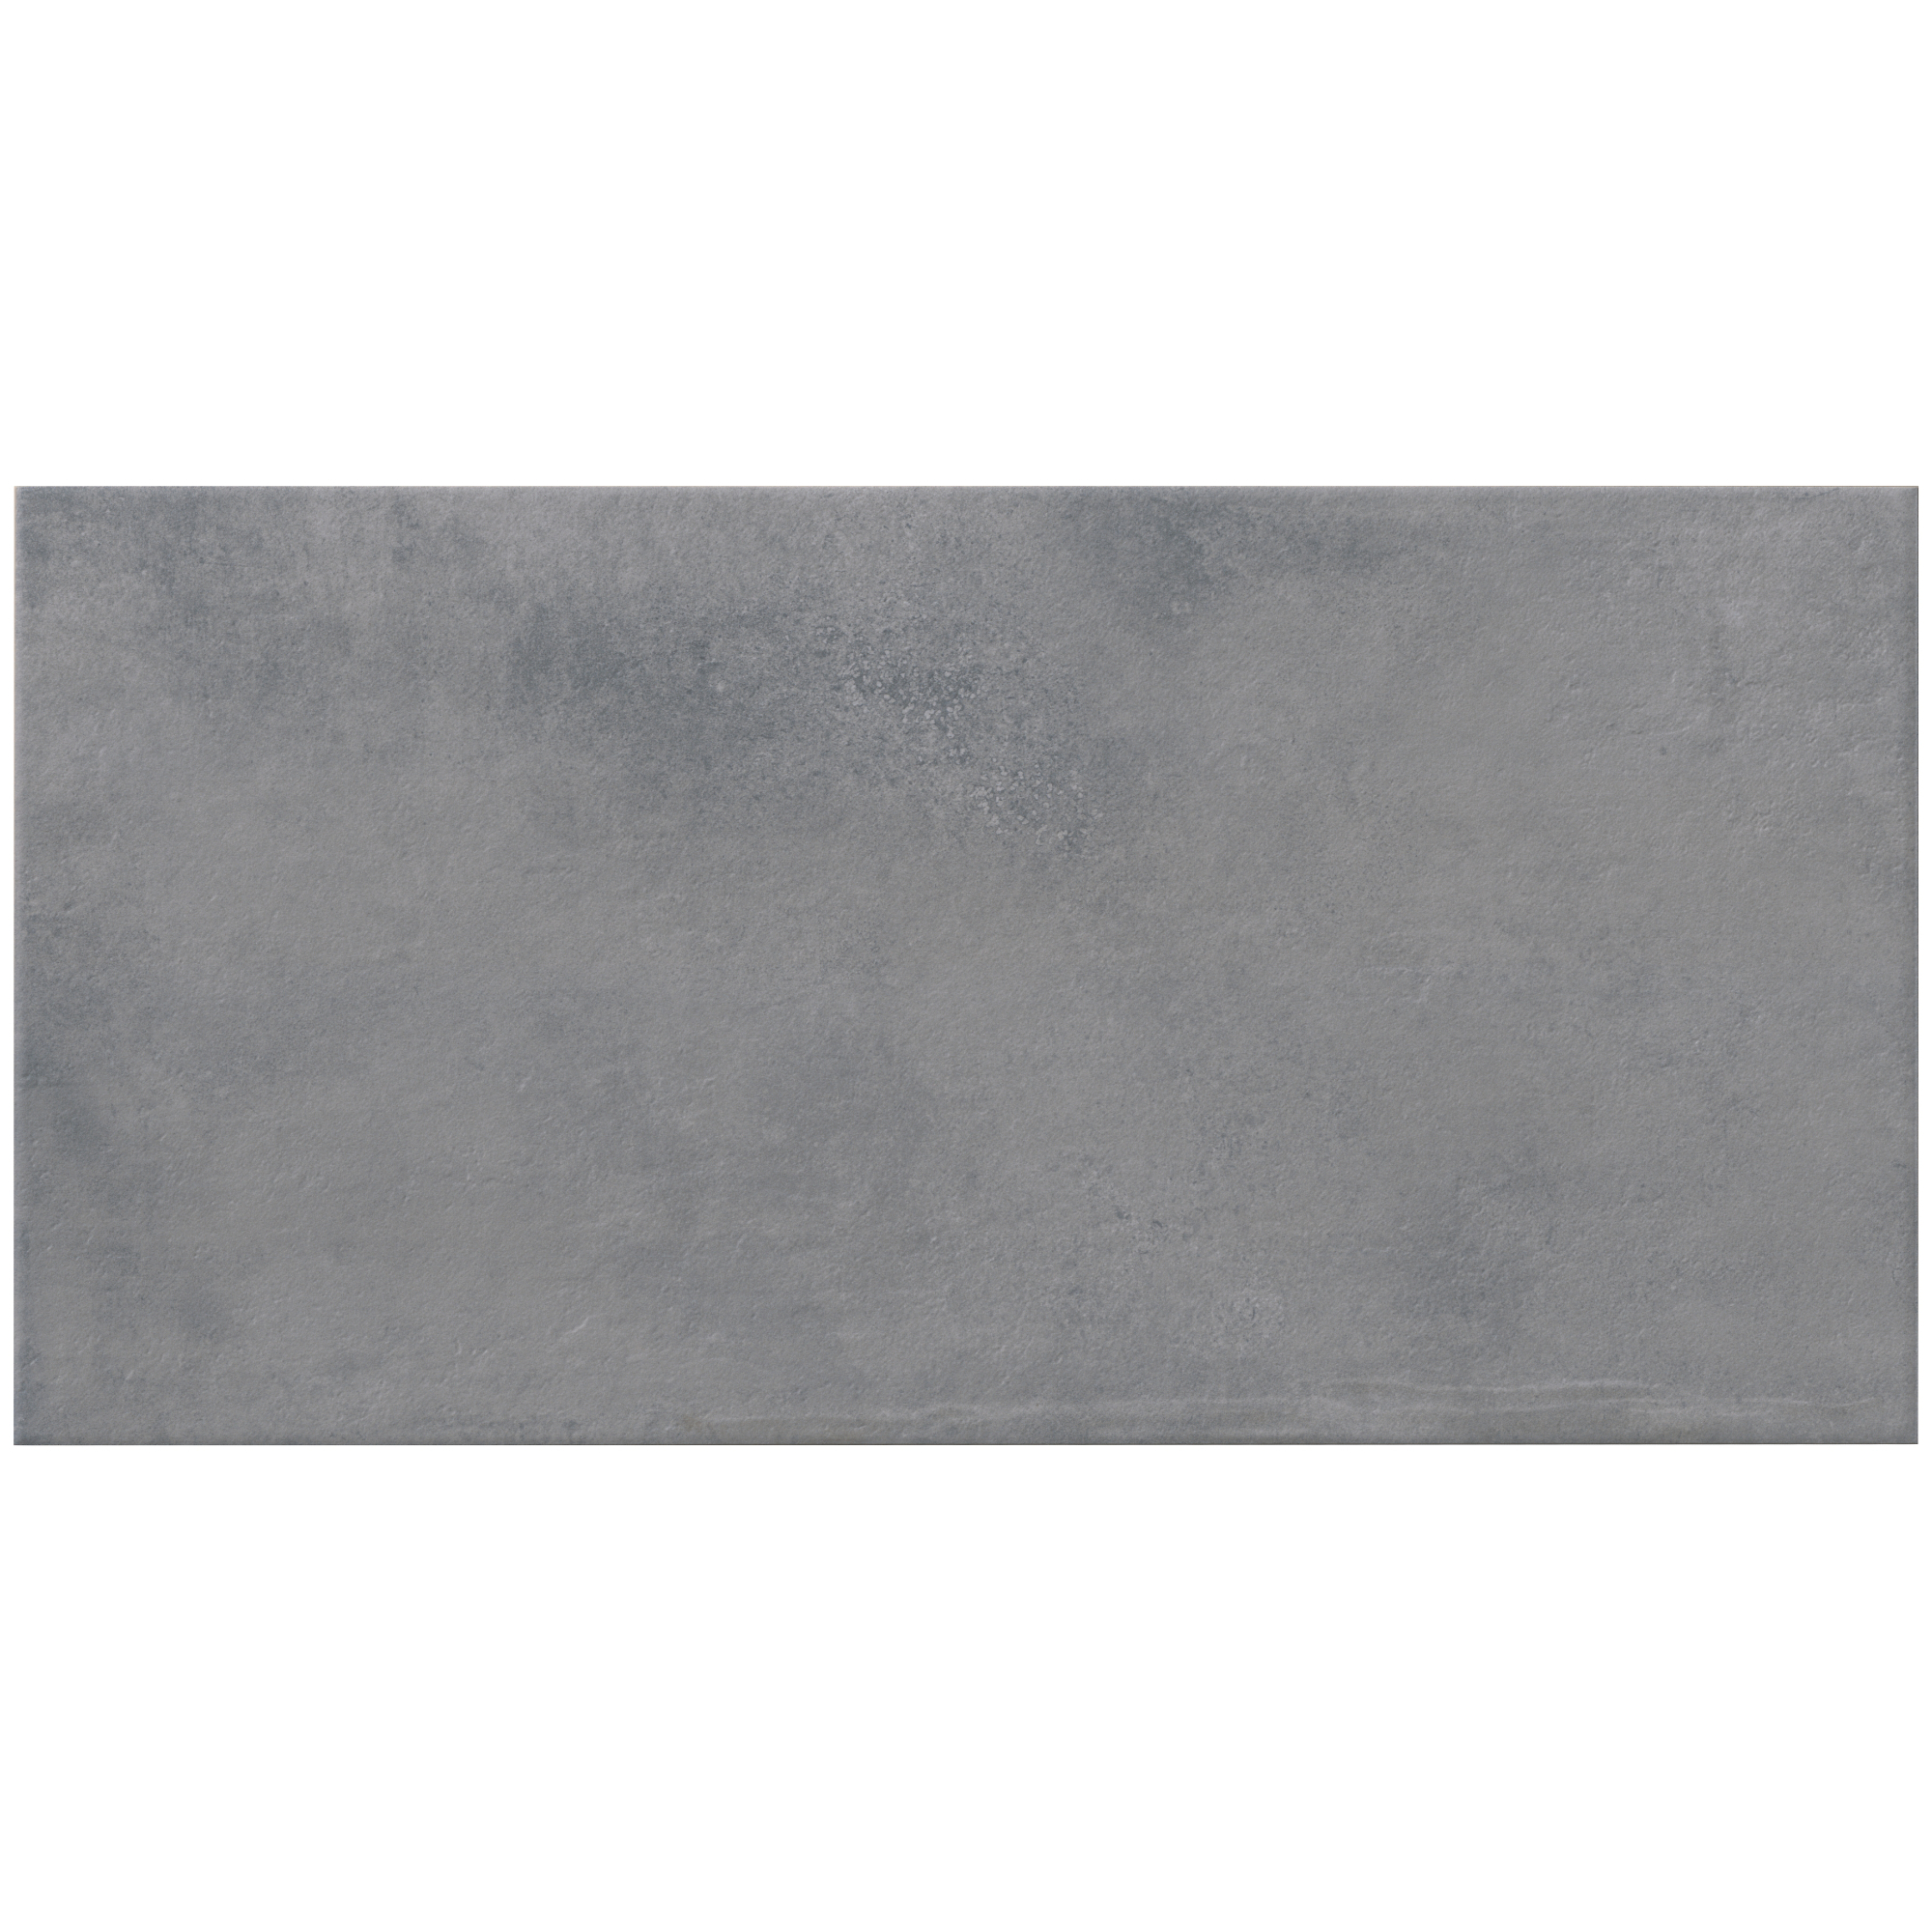 Materika Dark Grey RC 30.5x60.5cm